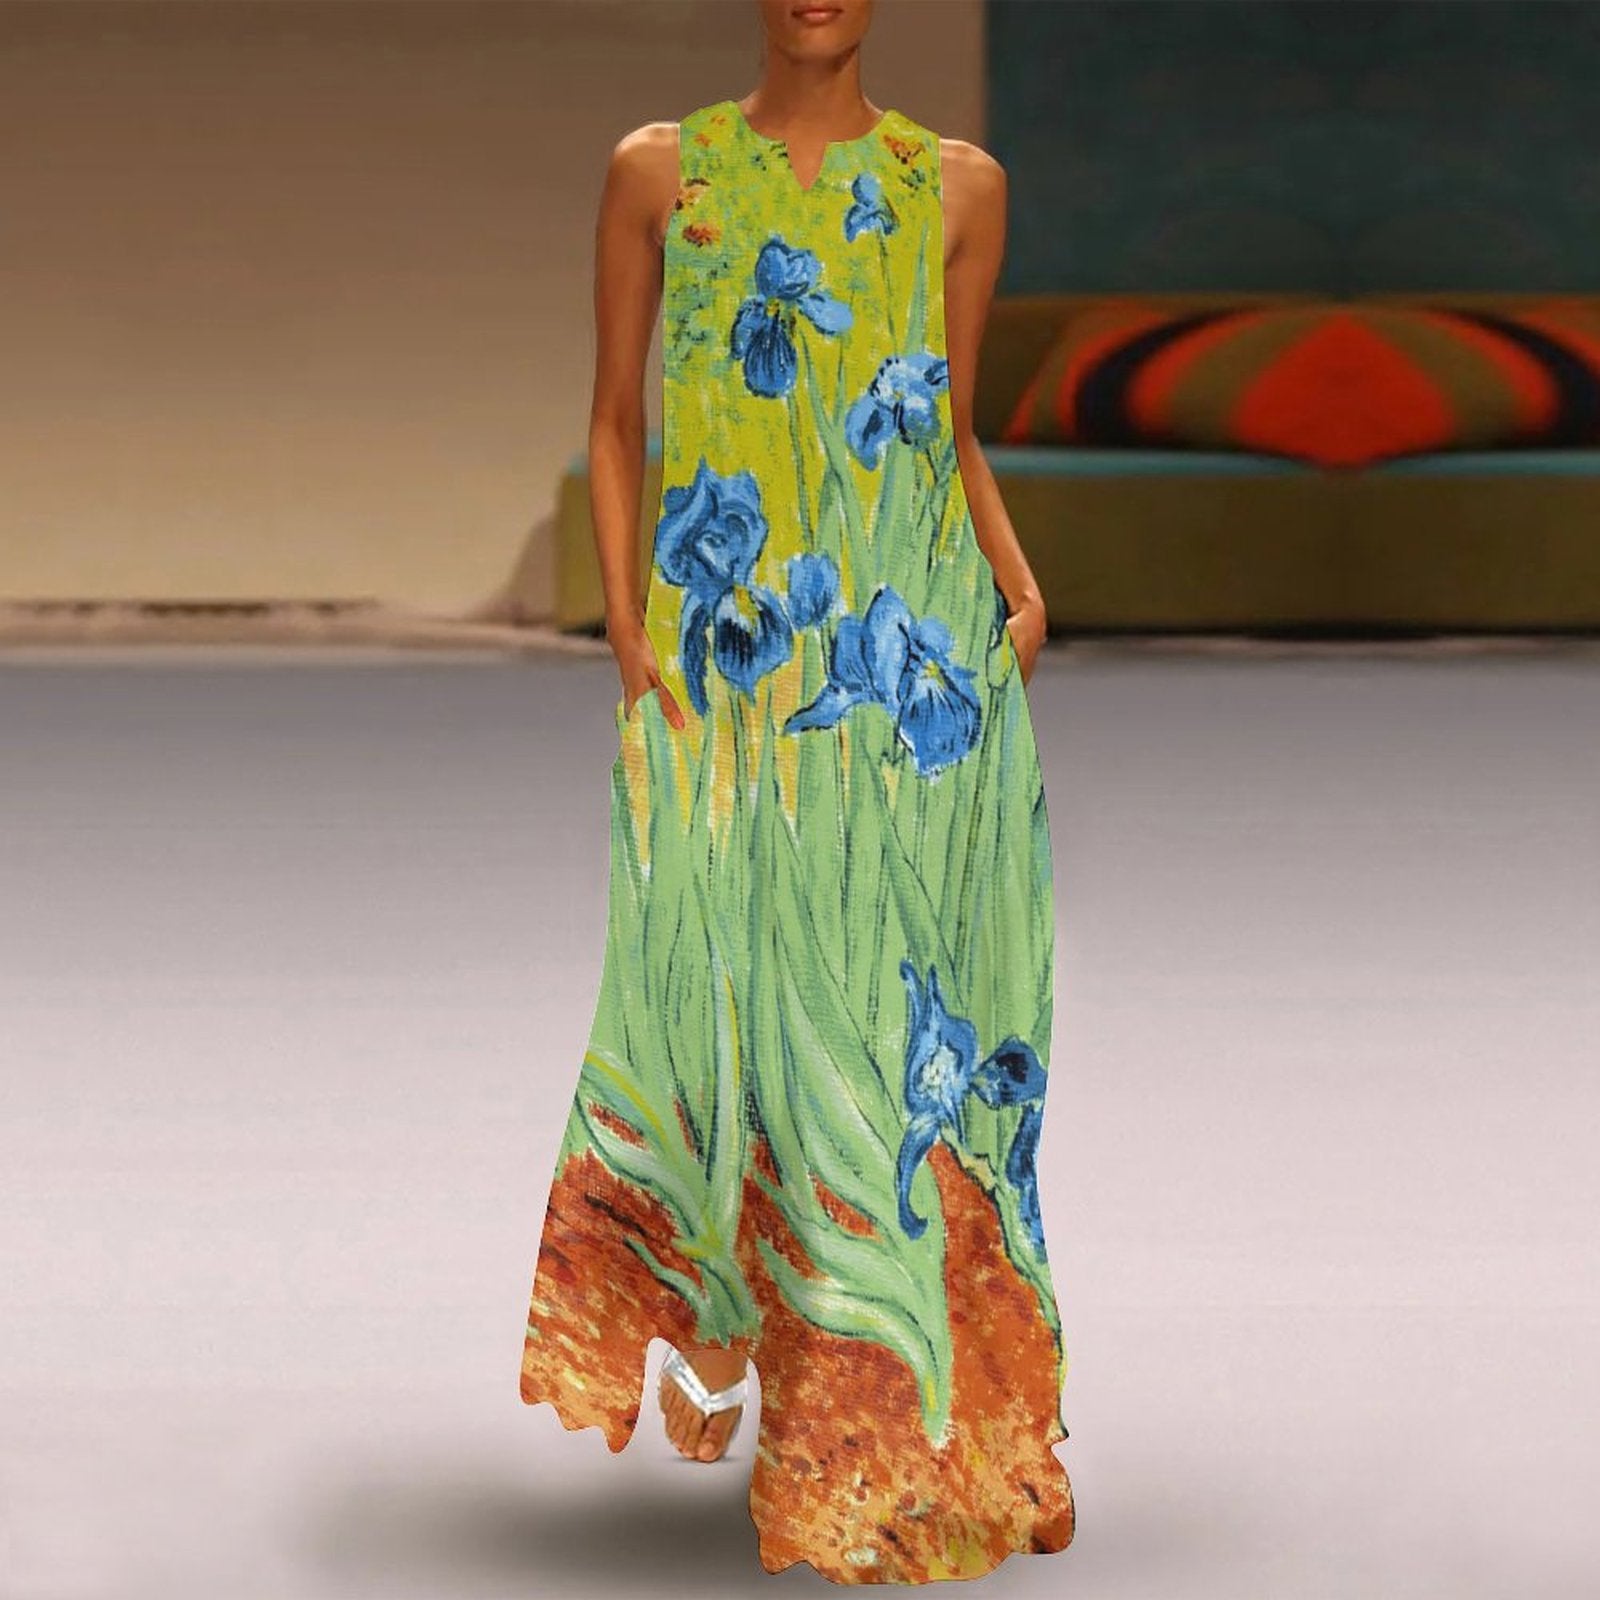 New Fashion Dress Top Oil Painiting Iandscape  Printed Long Dress Summer Women's Dresses Free Shipping